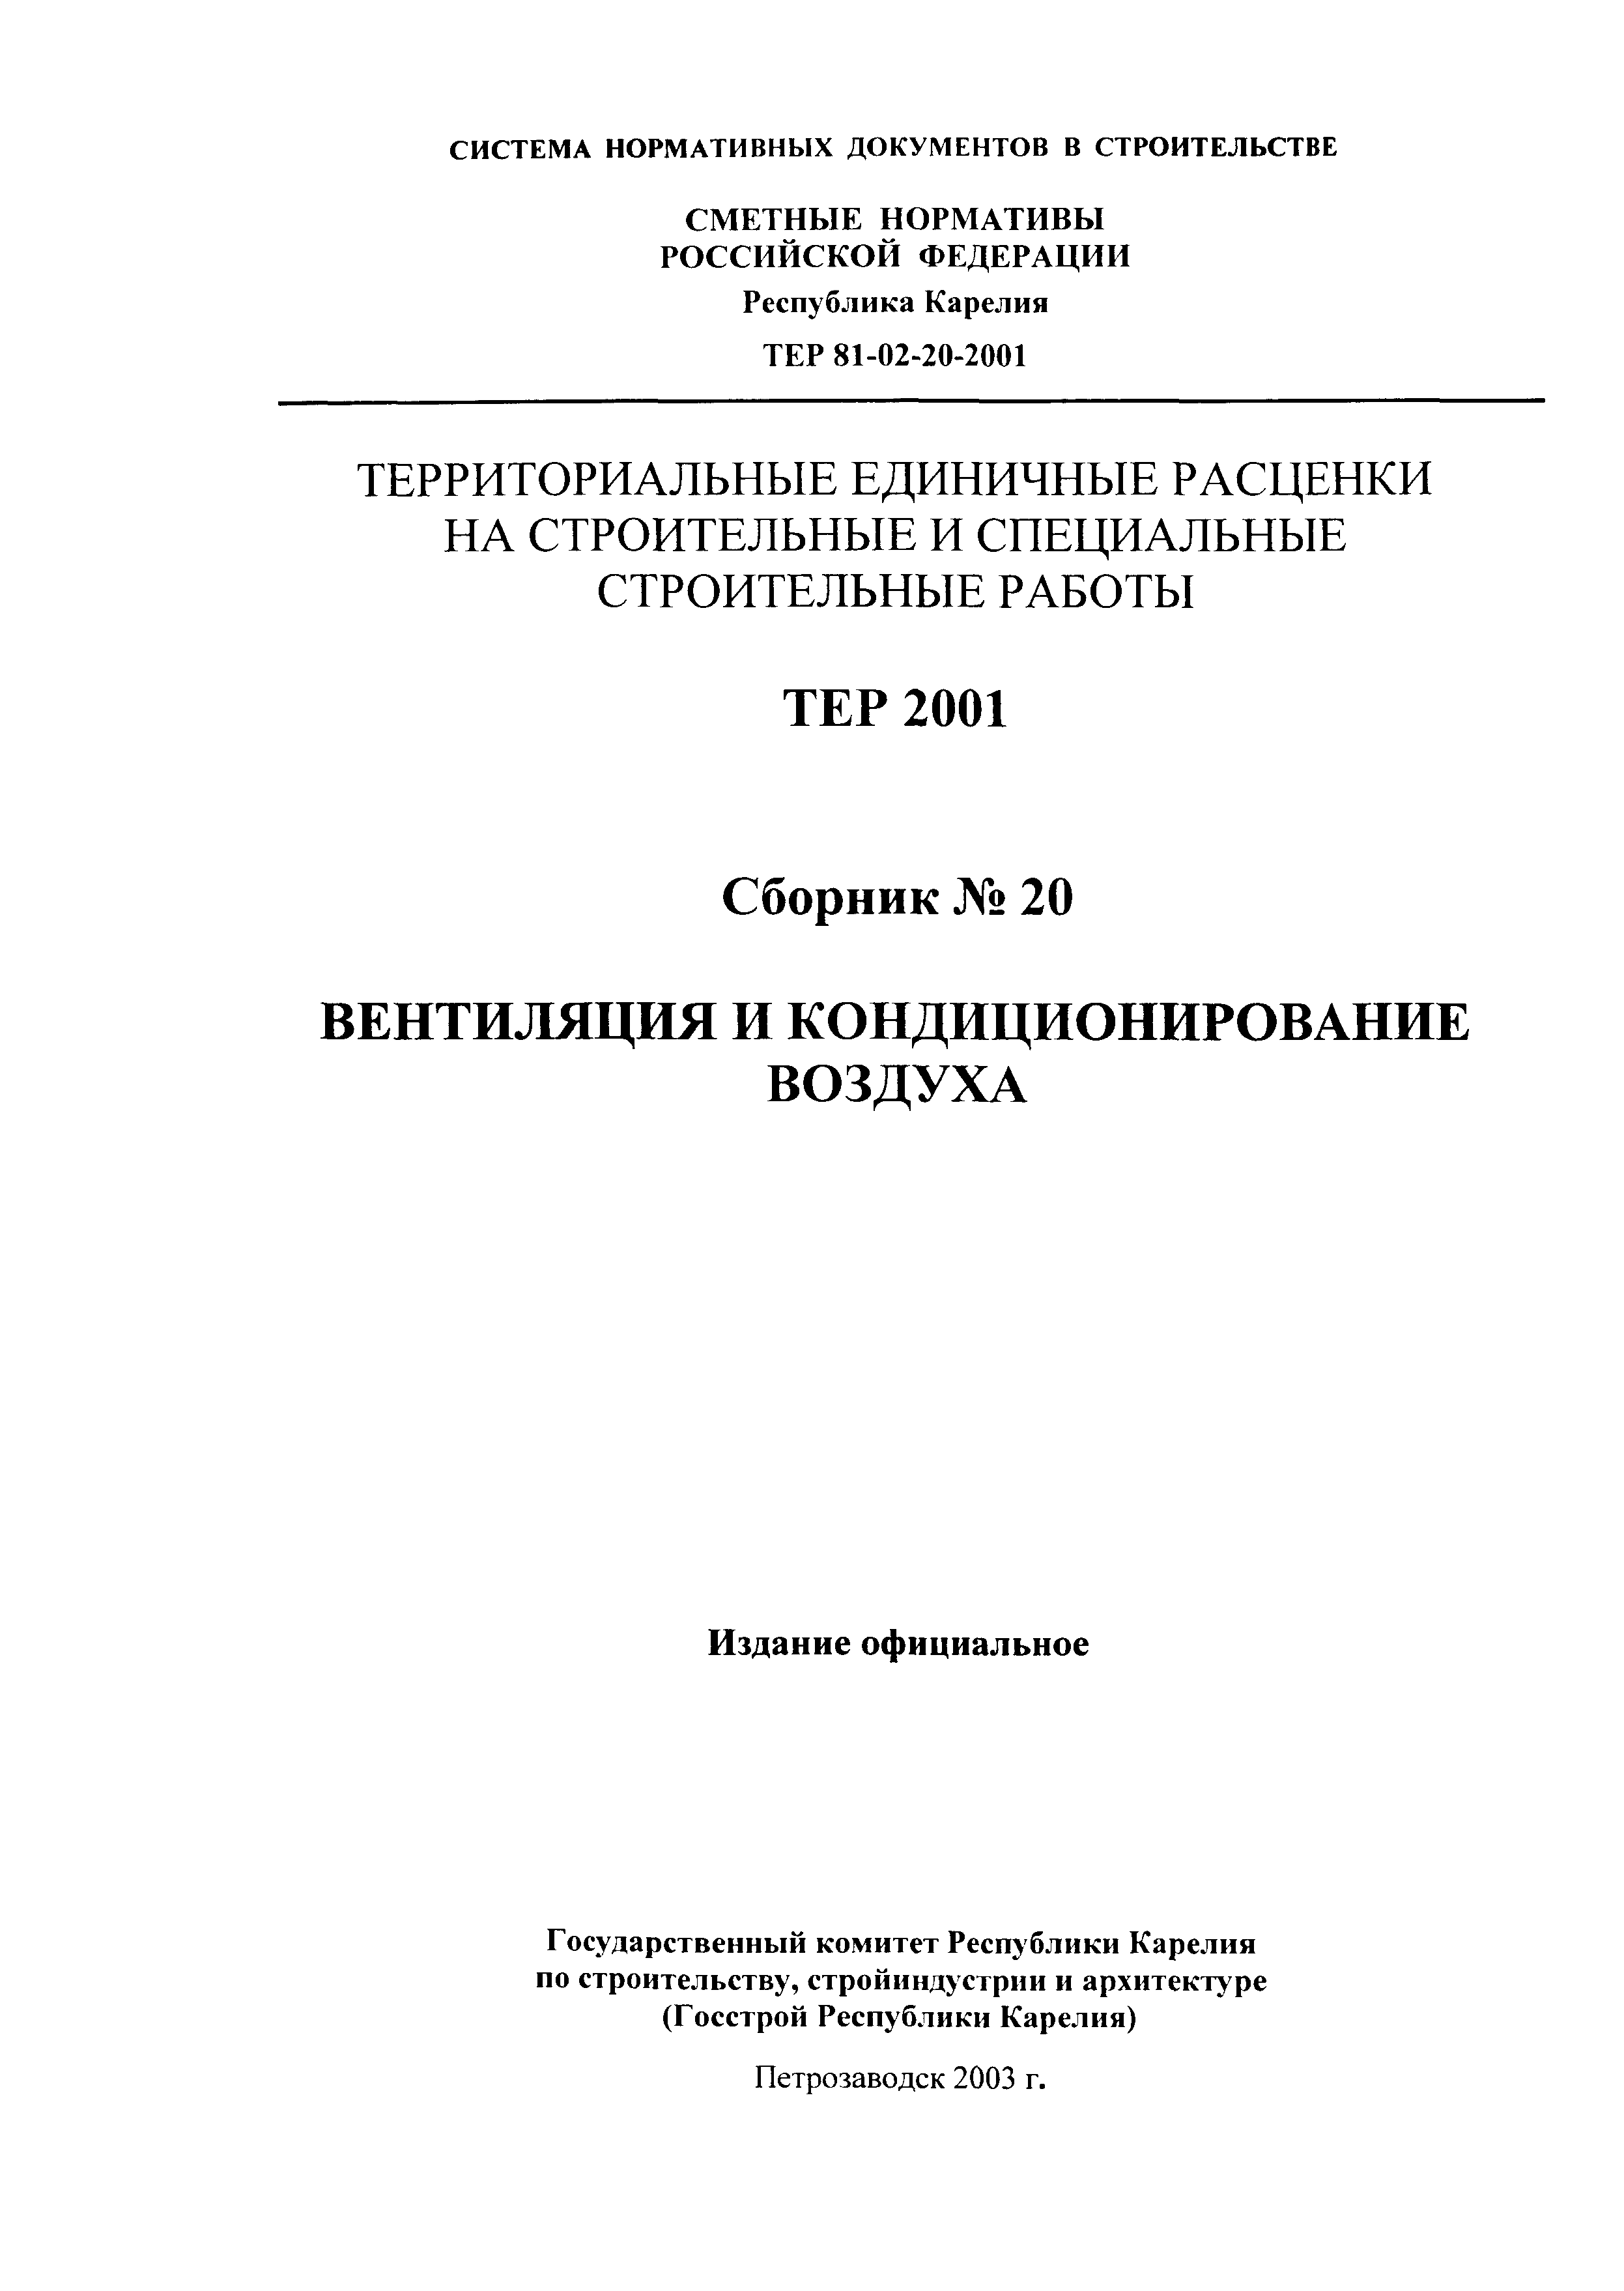 ТЕР Республика Карелия 2001-20